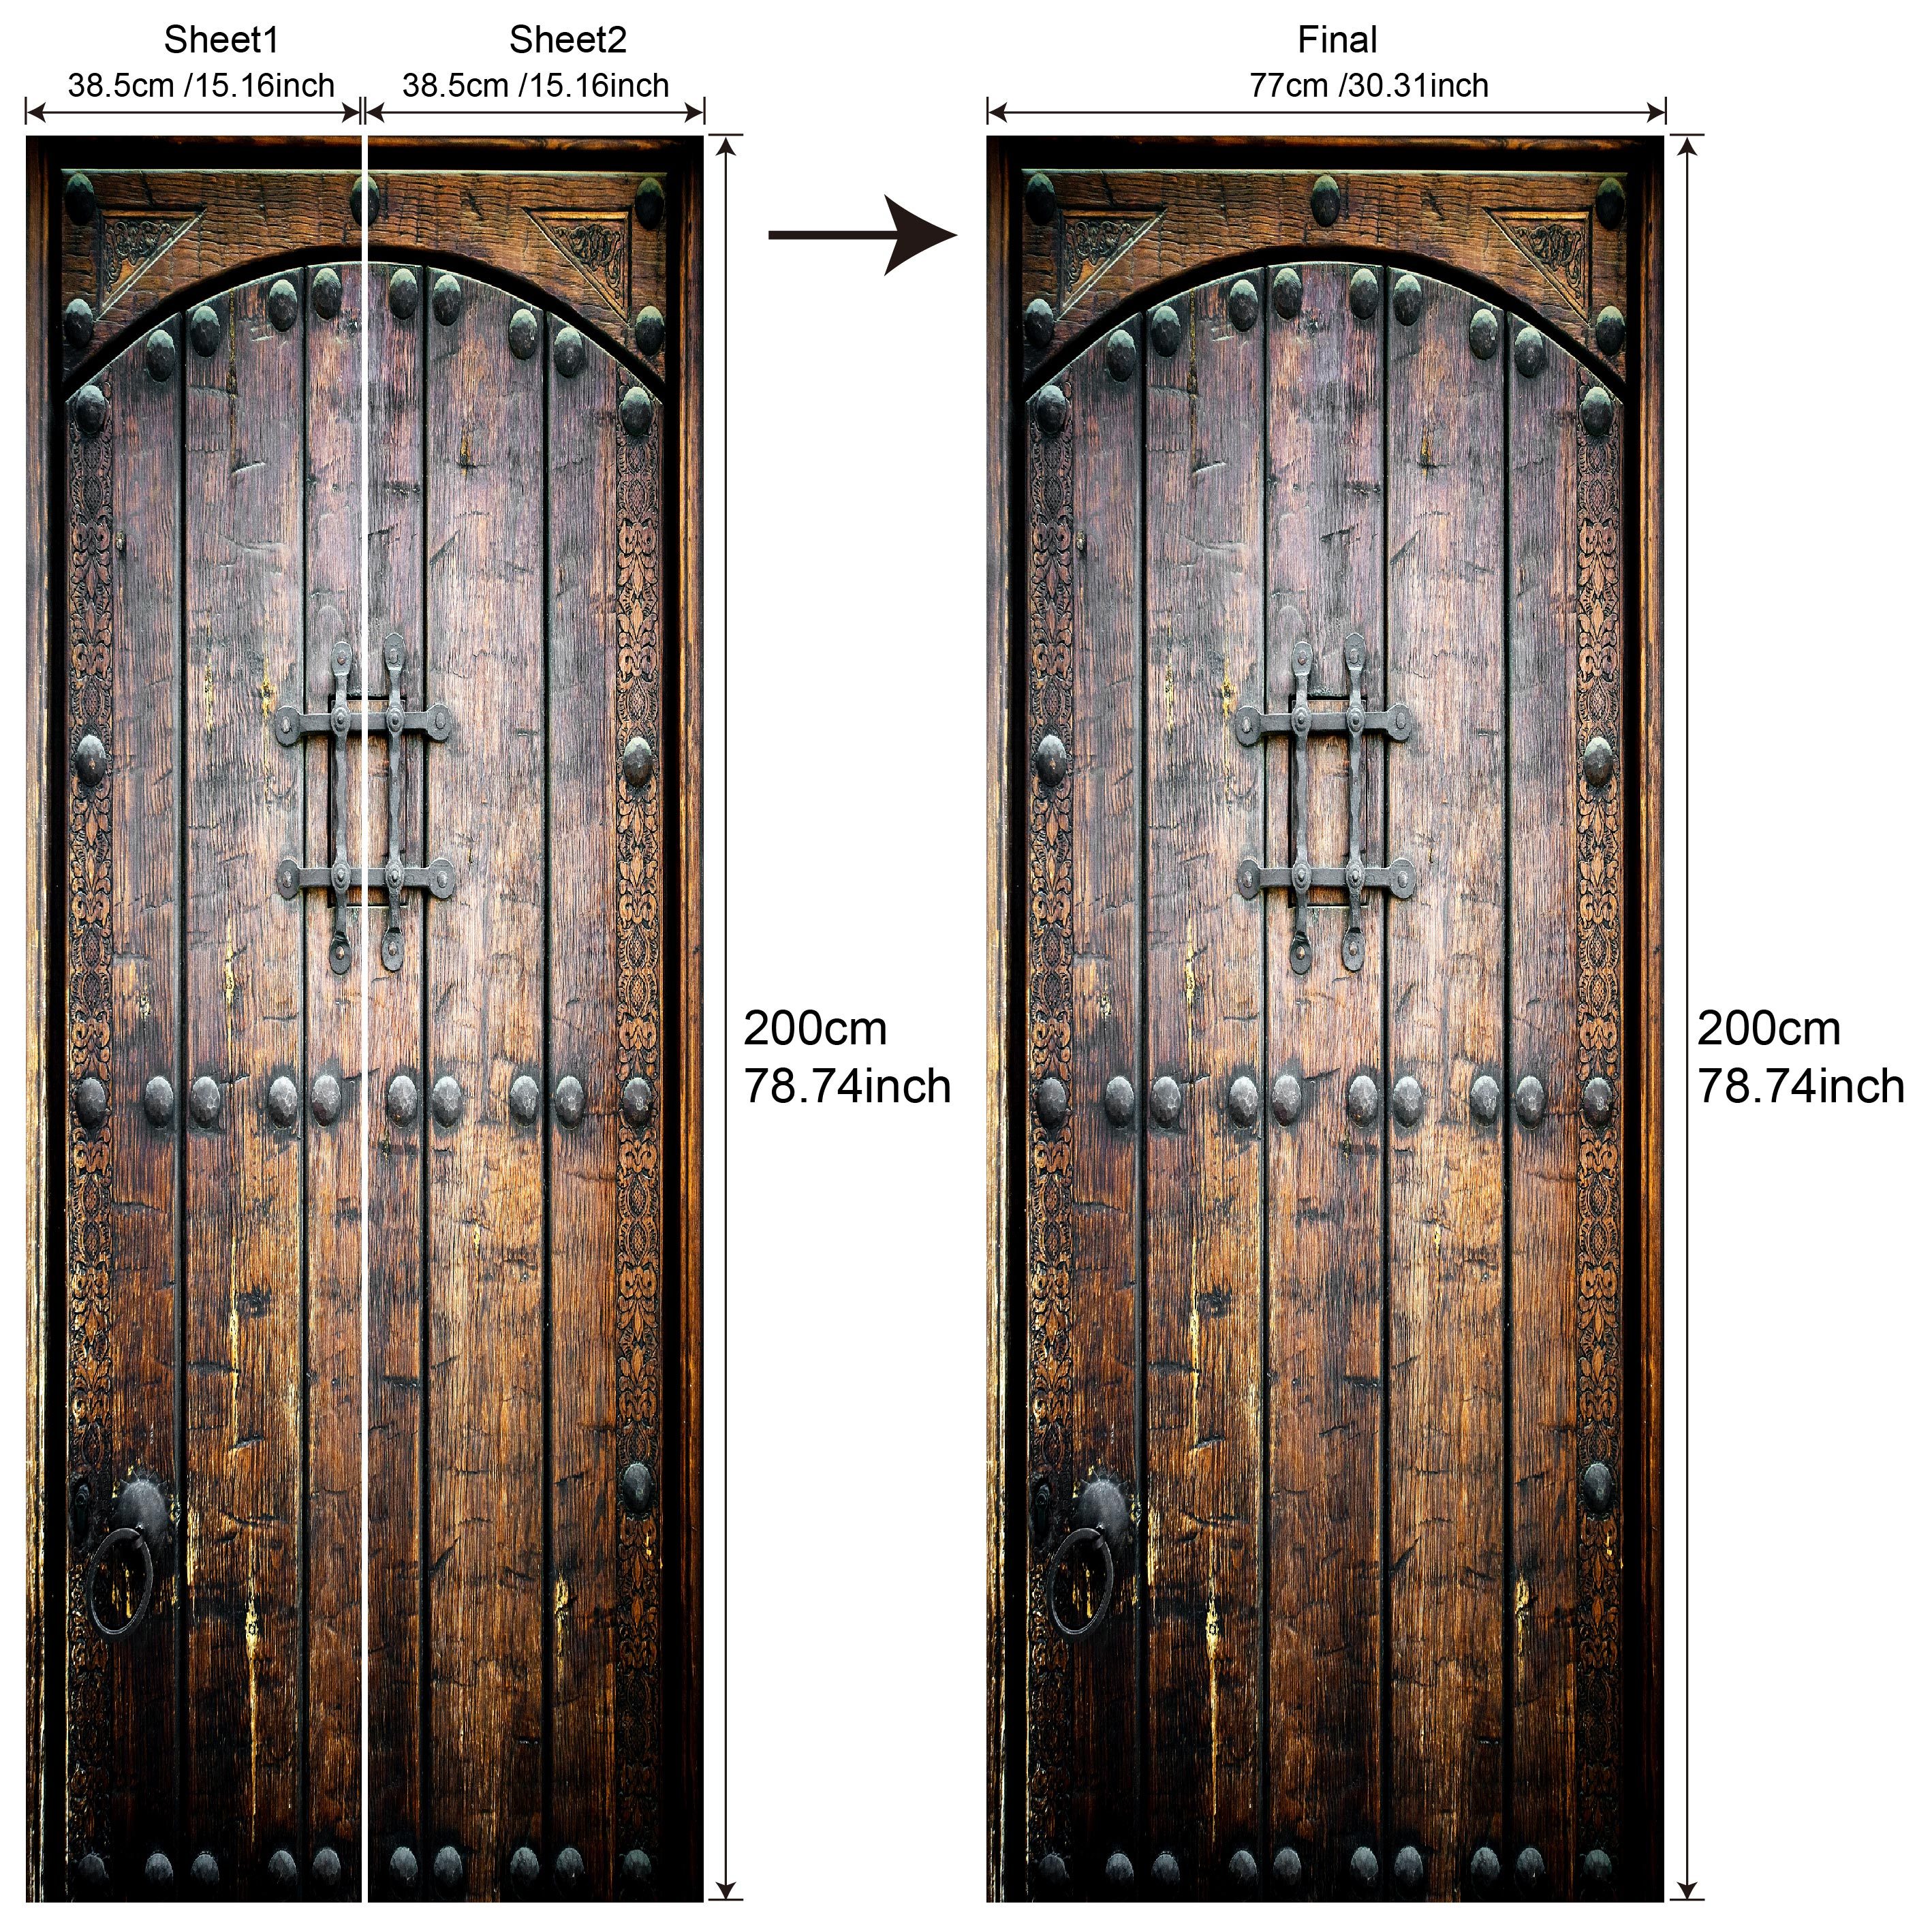 vinilo puerta madera 77x200cm(30.31 inches * 78.74 inches)Puerta